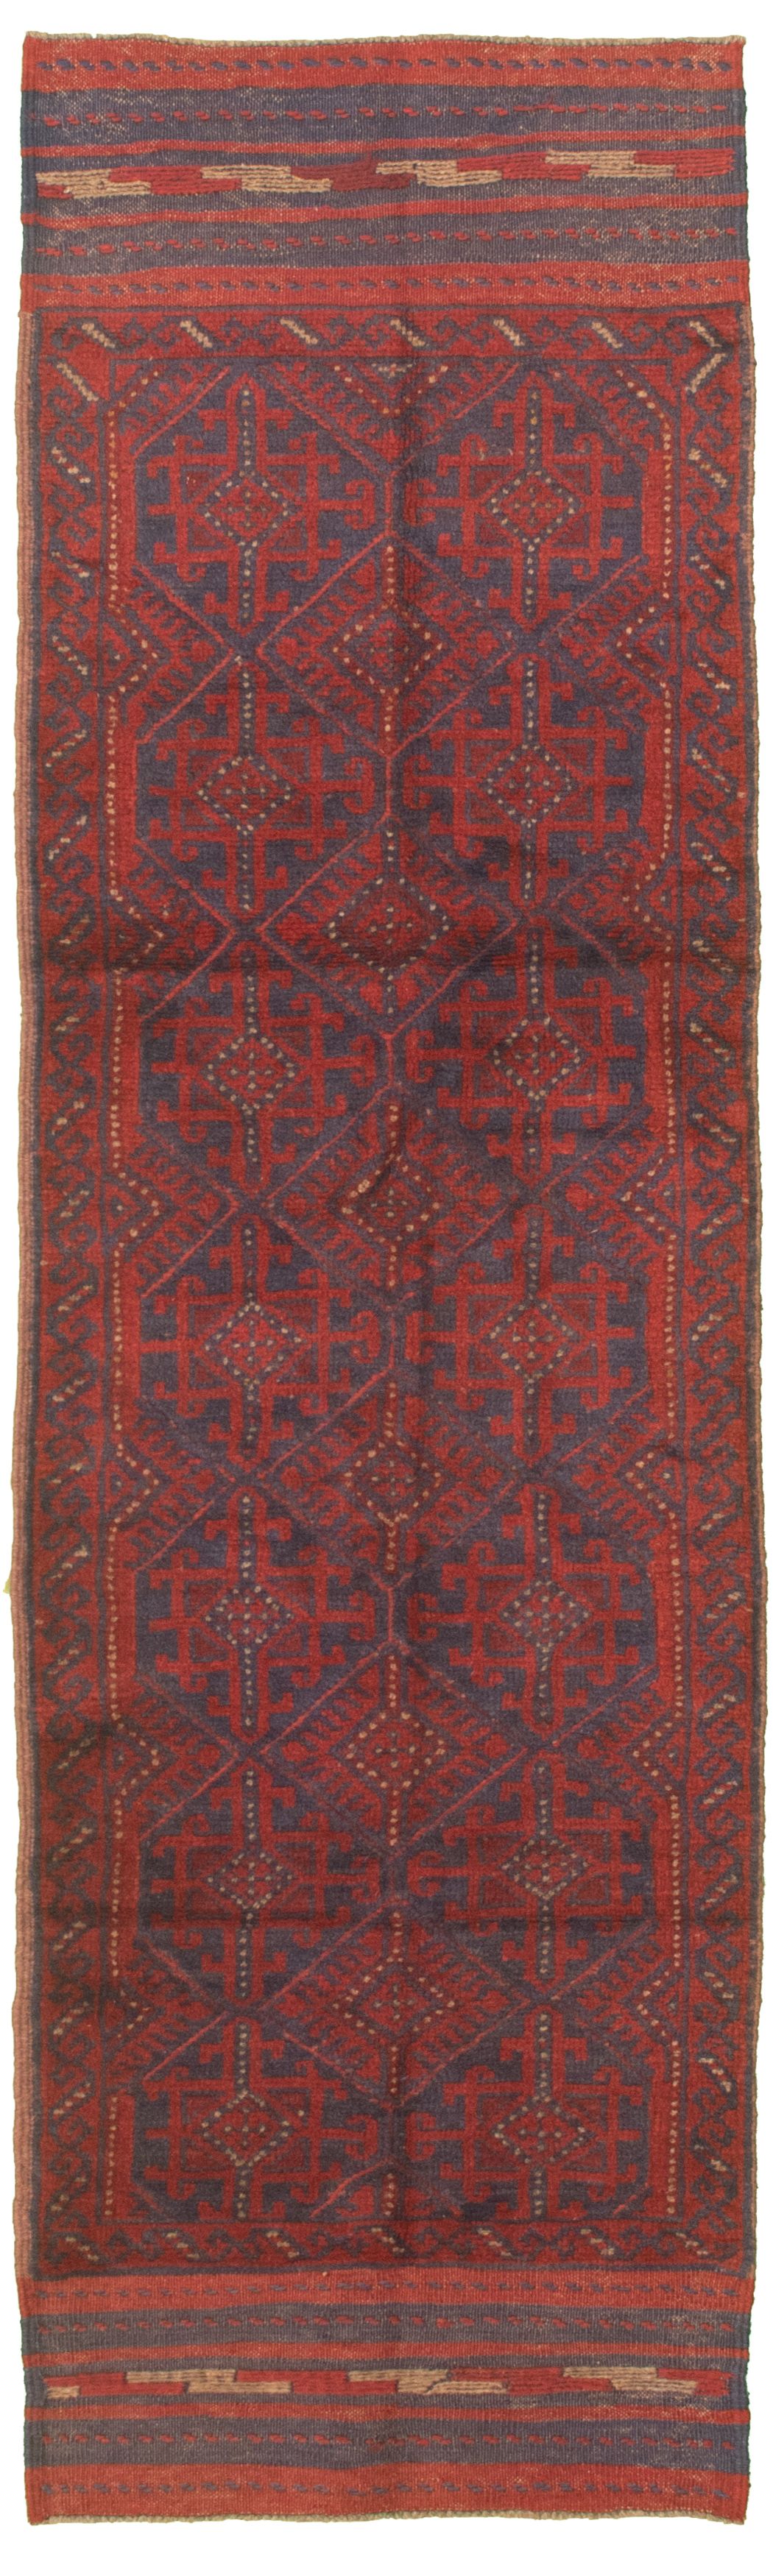 Hand-knotted Tajik Caucasian Red Wool Rug 2'2" x 8'7"  Size: 2'2" x 8'7"  